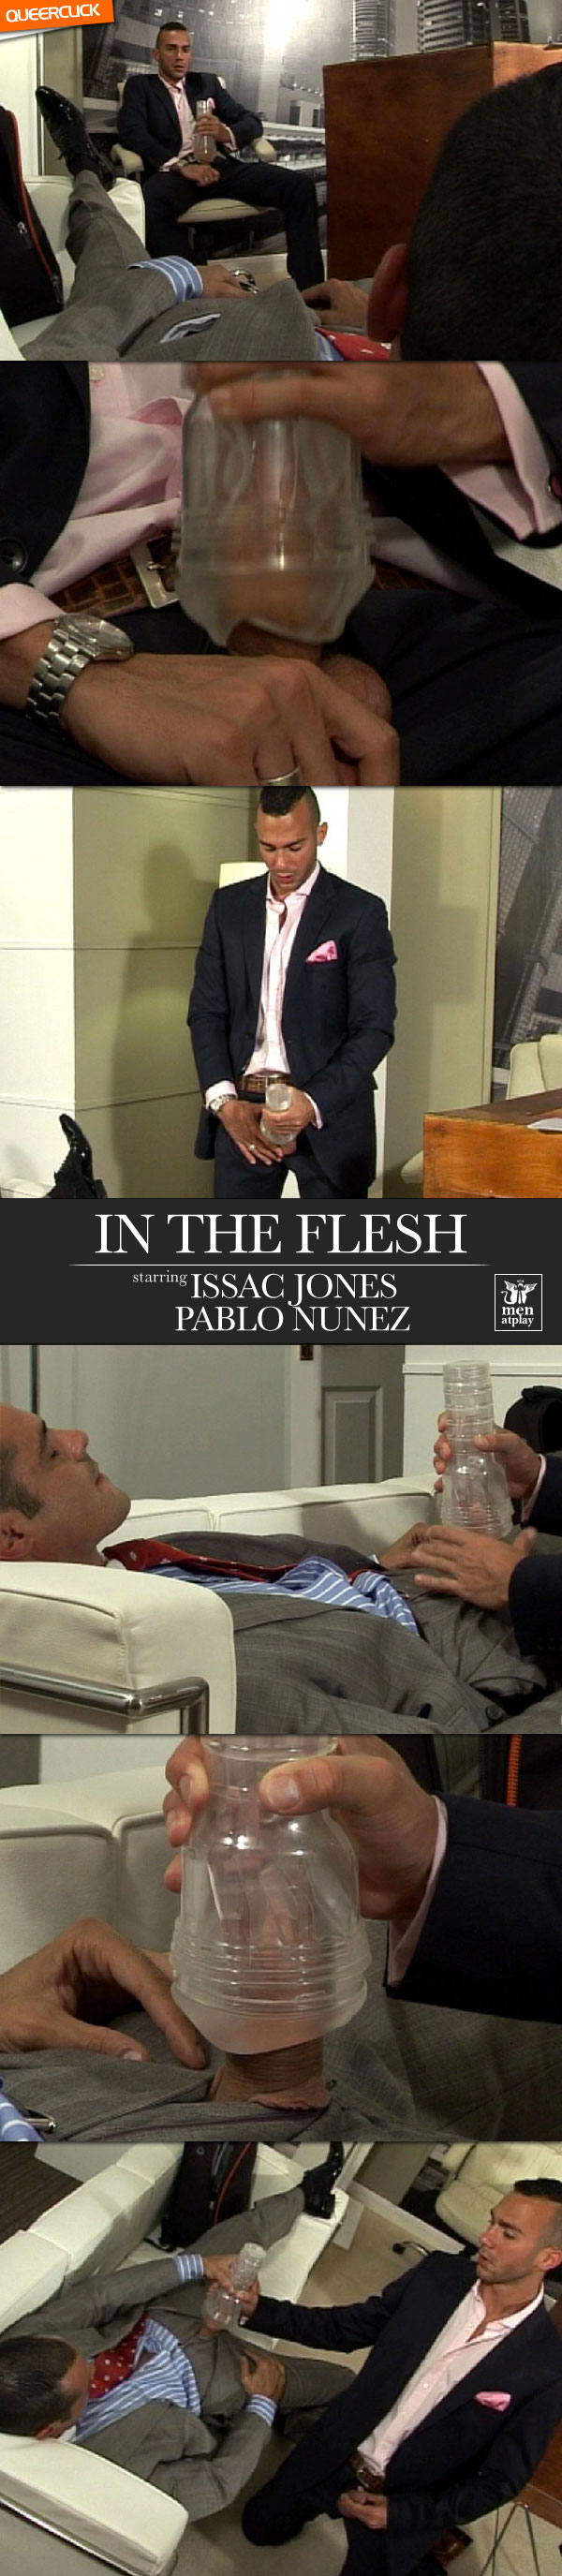 Men At Play: In The Flesh - Issac Jones and Pablo Nunez